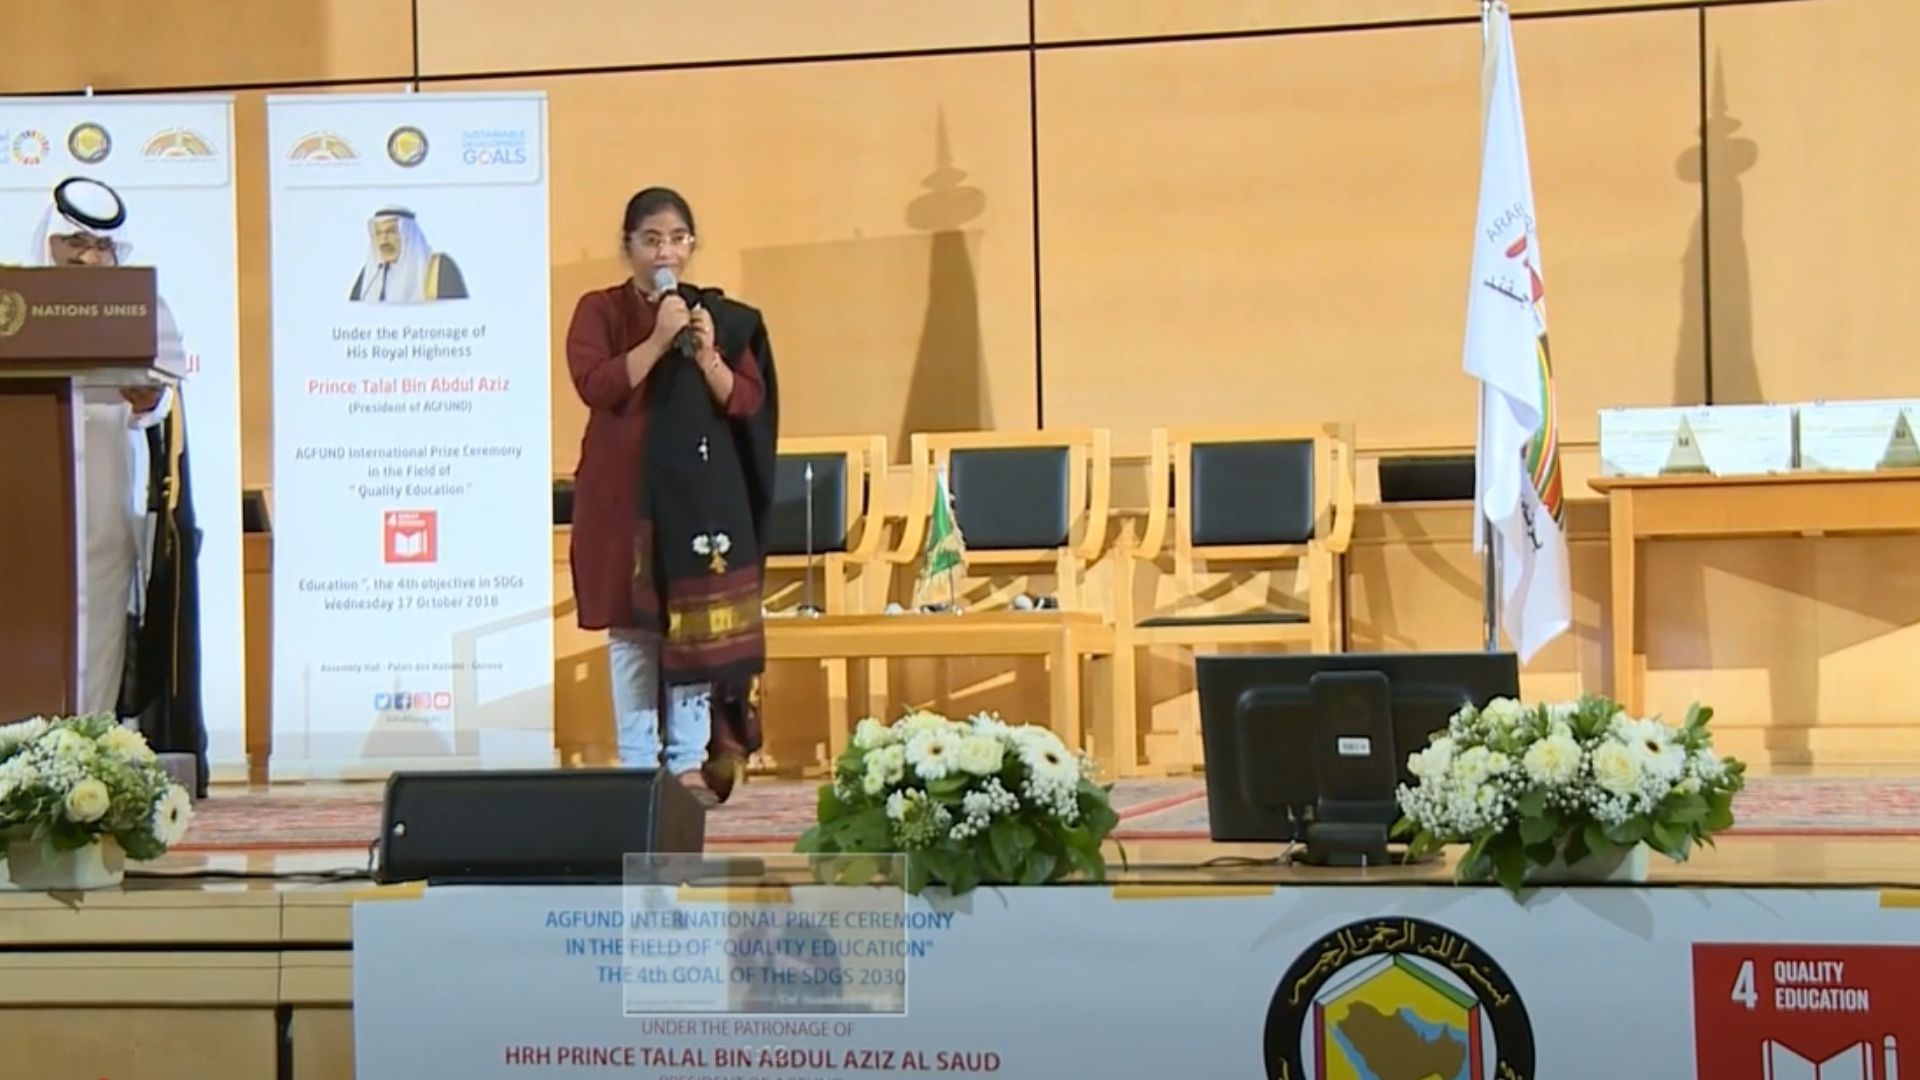 Speech of Dr. Sunitha Krishnan (AGFUND Prize winner on" Quality Education")